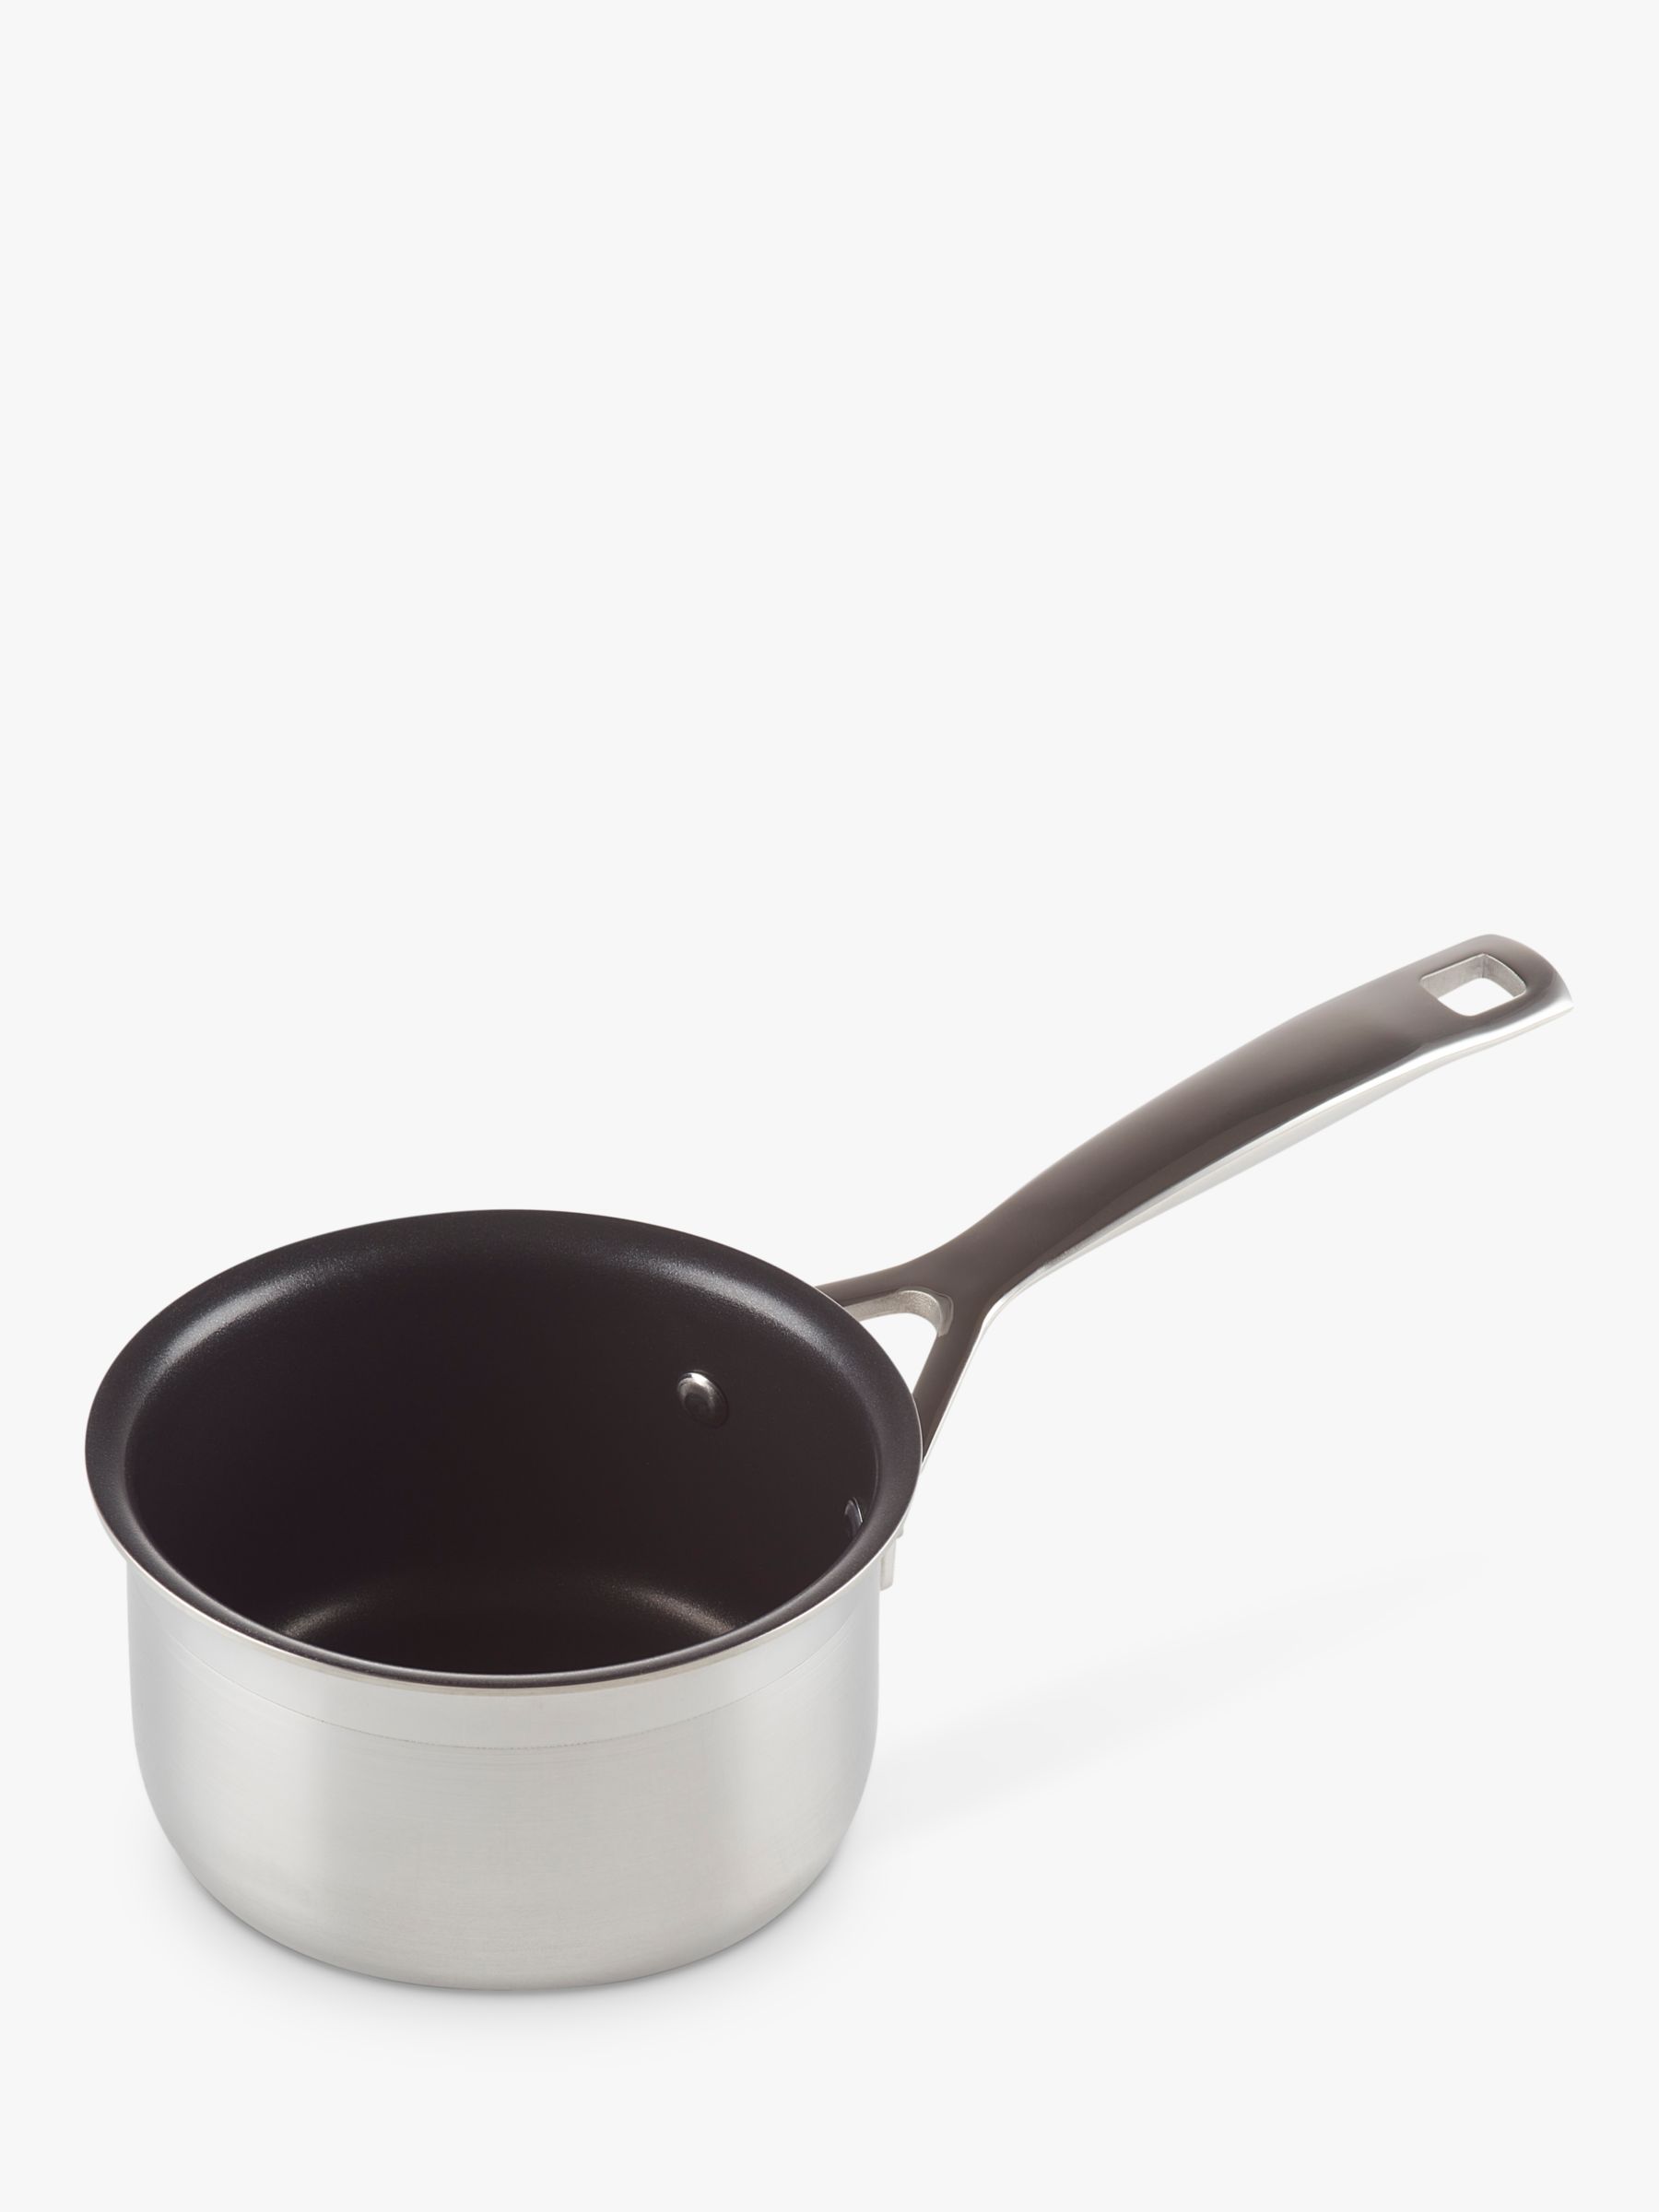 Le Creuset 3-Ply Stainless Steel Milk Pan, 14cm